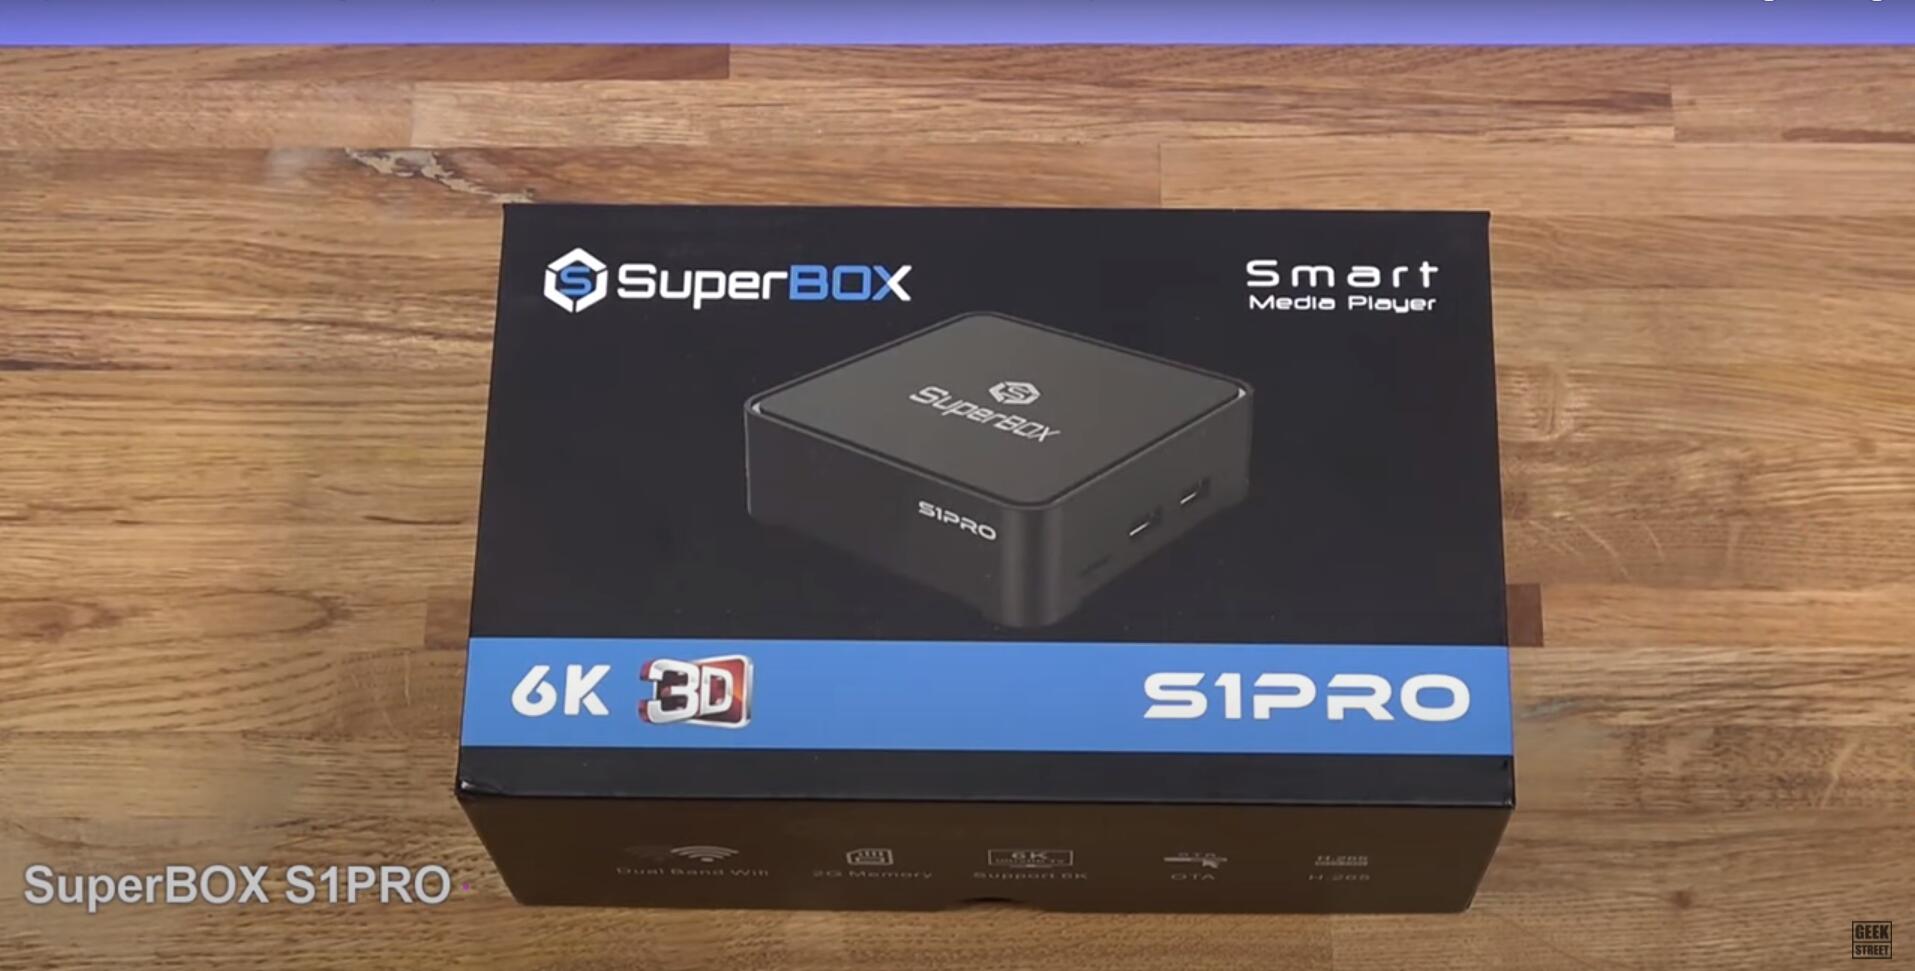  SuperBox S1 Pro - Revolutionary Android TV Box